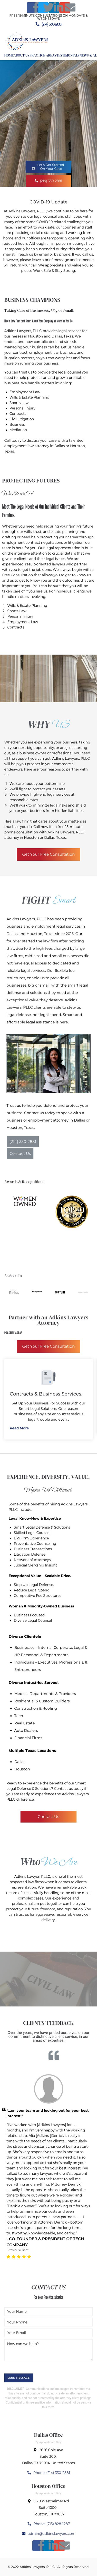 Derrick Law - Dallas TX Lawyers